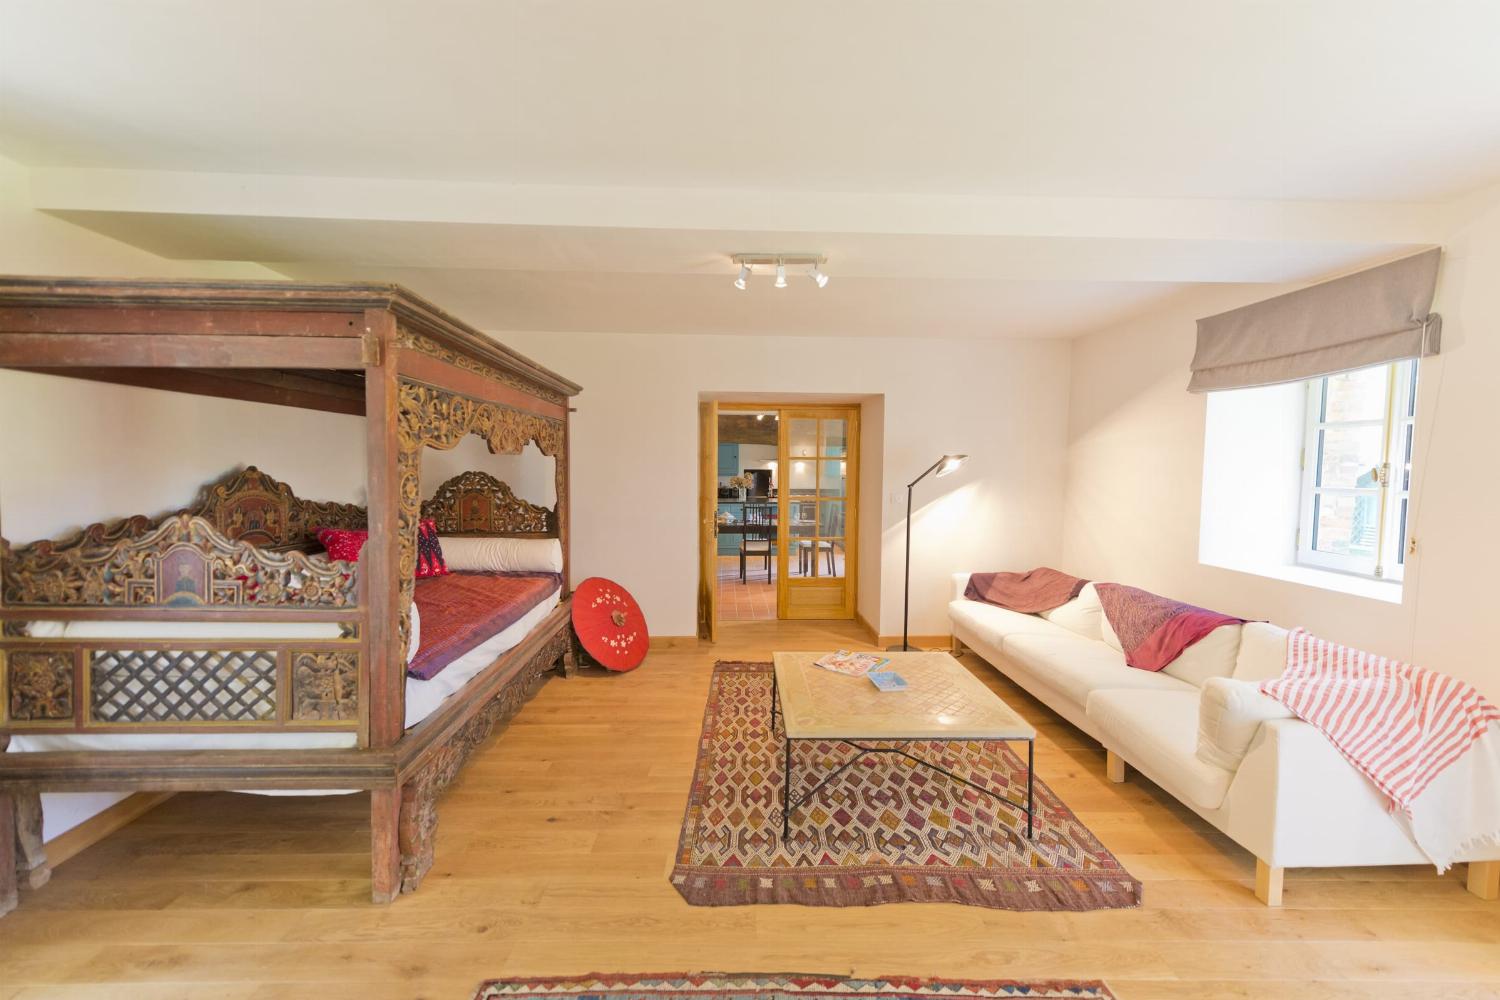 Living room | Rental home in Loire